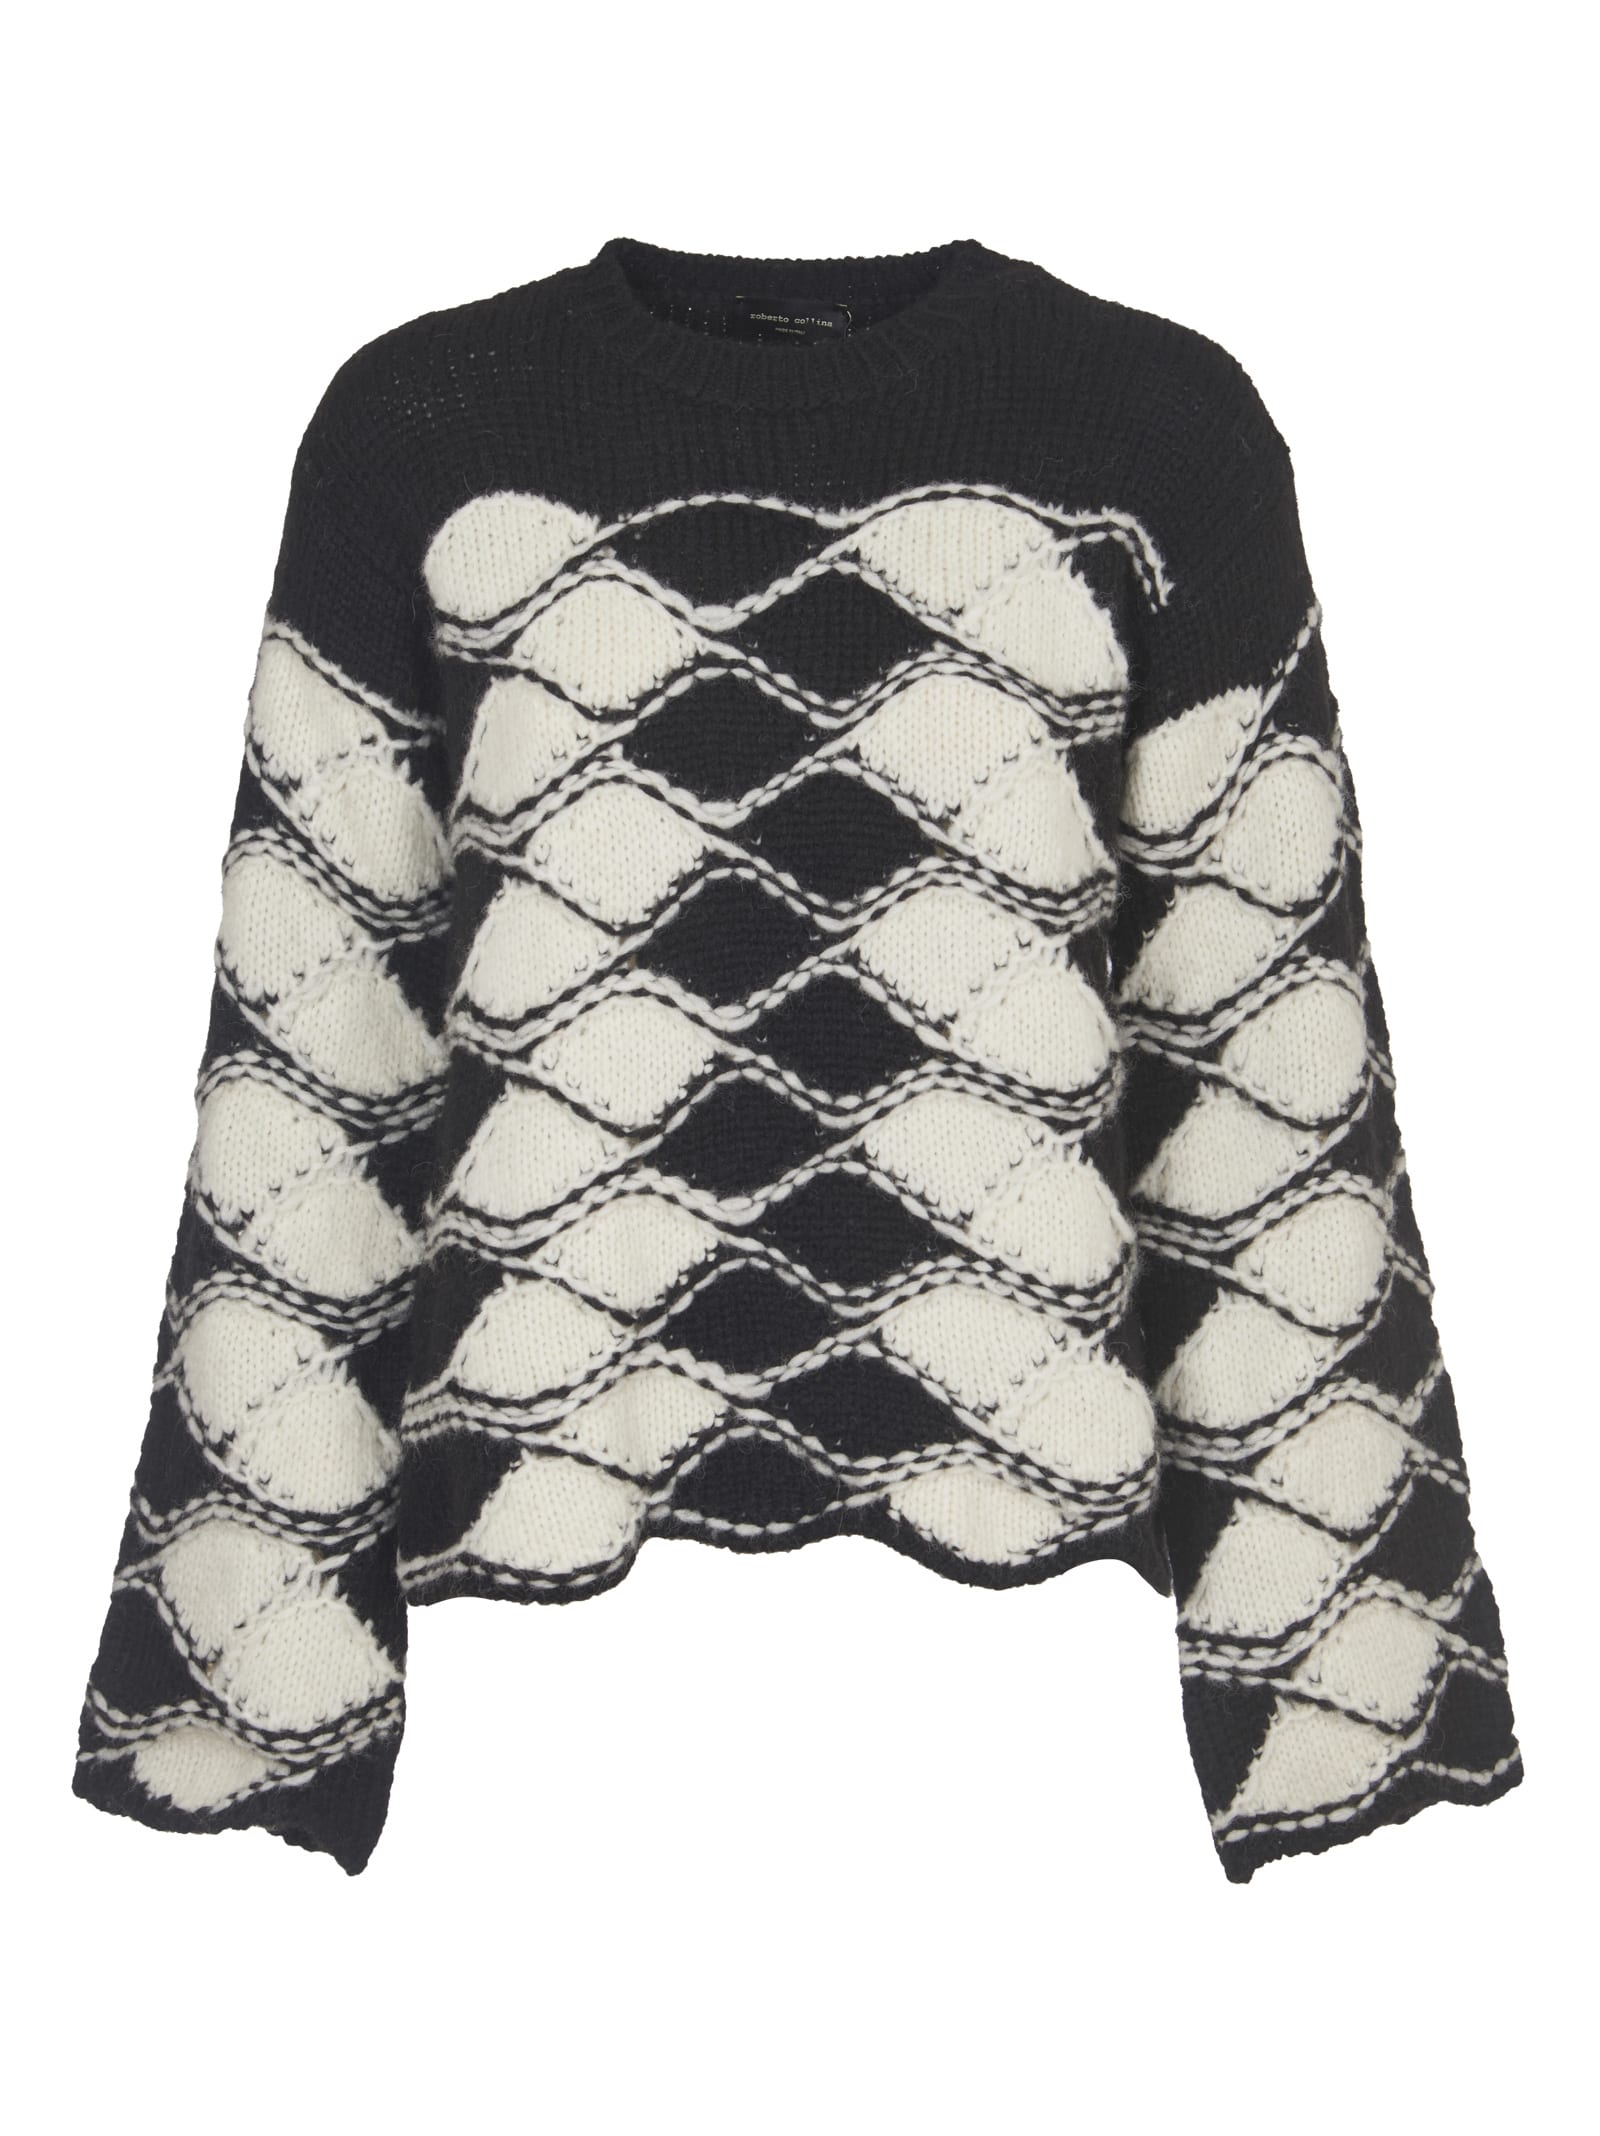 Roberto Collina Black And White Jacquard Sweater